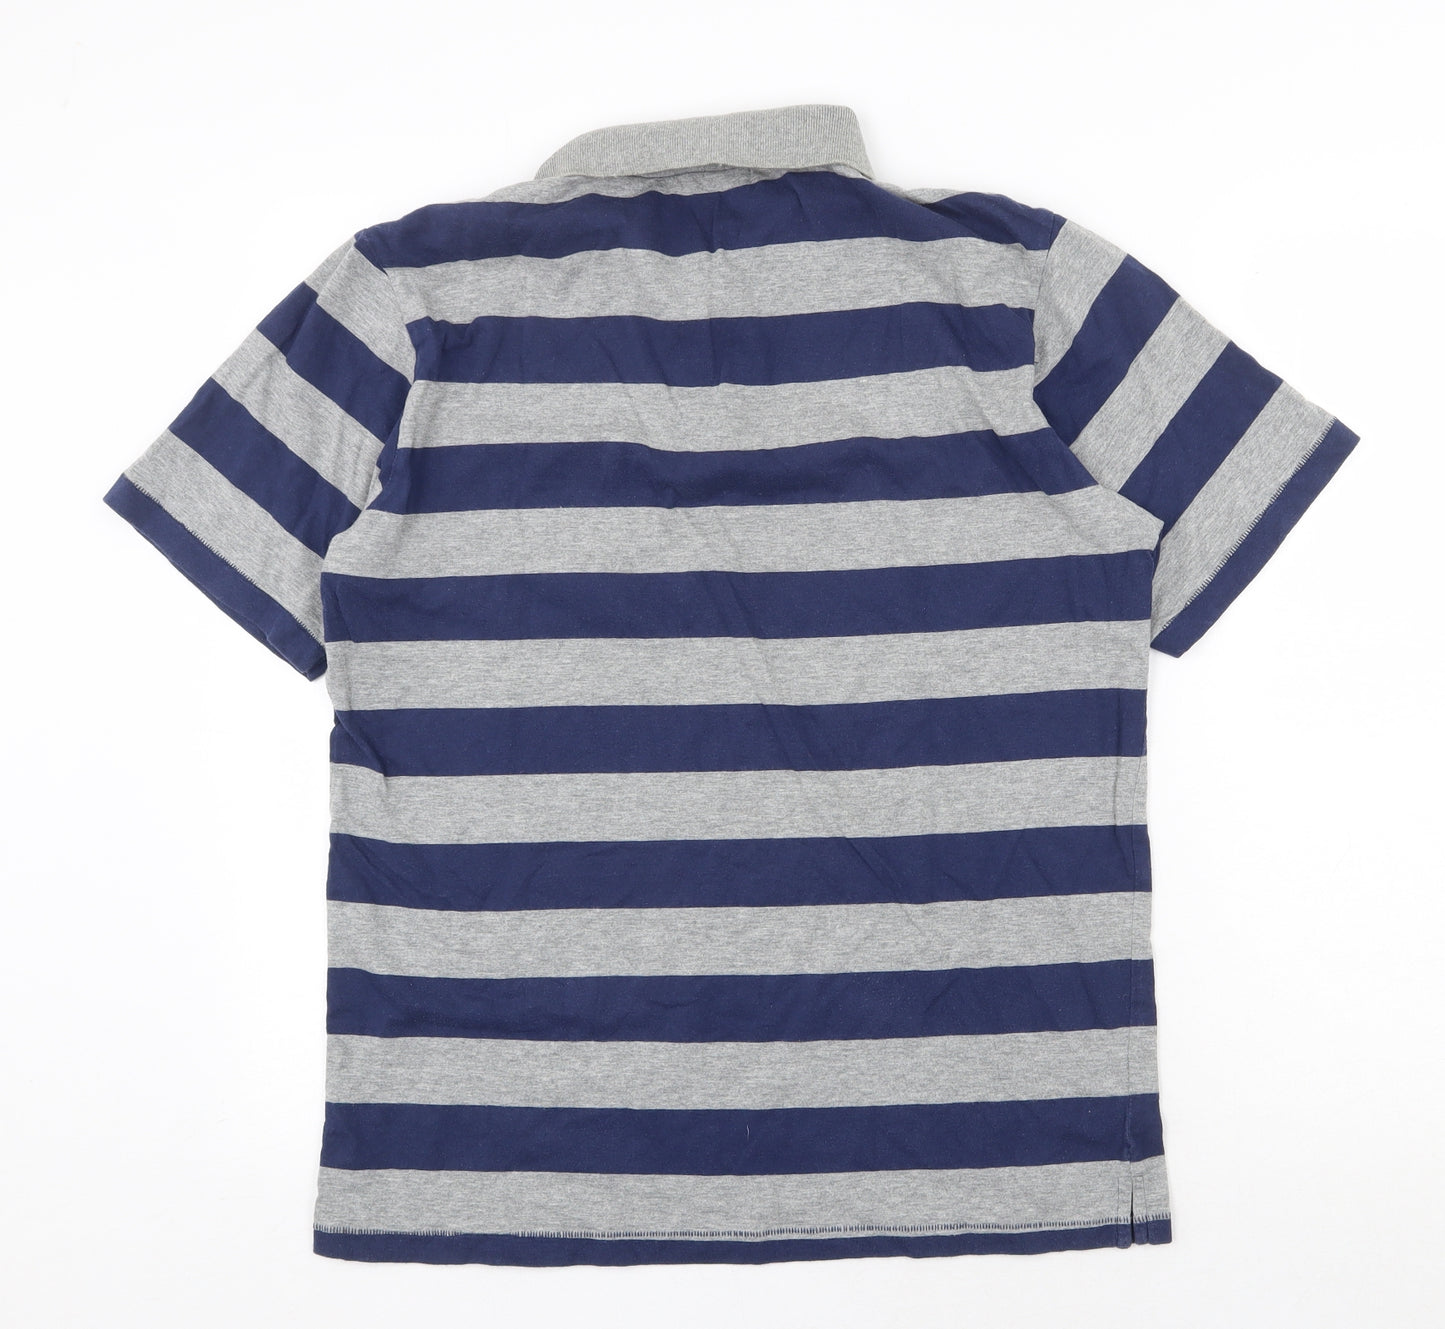 Gap Mens Blue Striped Cotton Polo Size M Collared Button